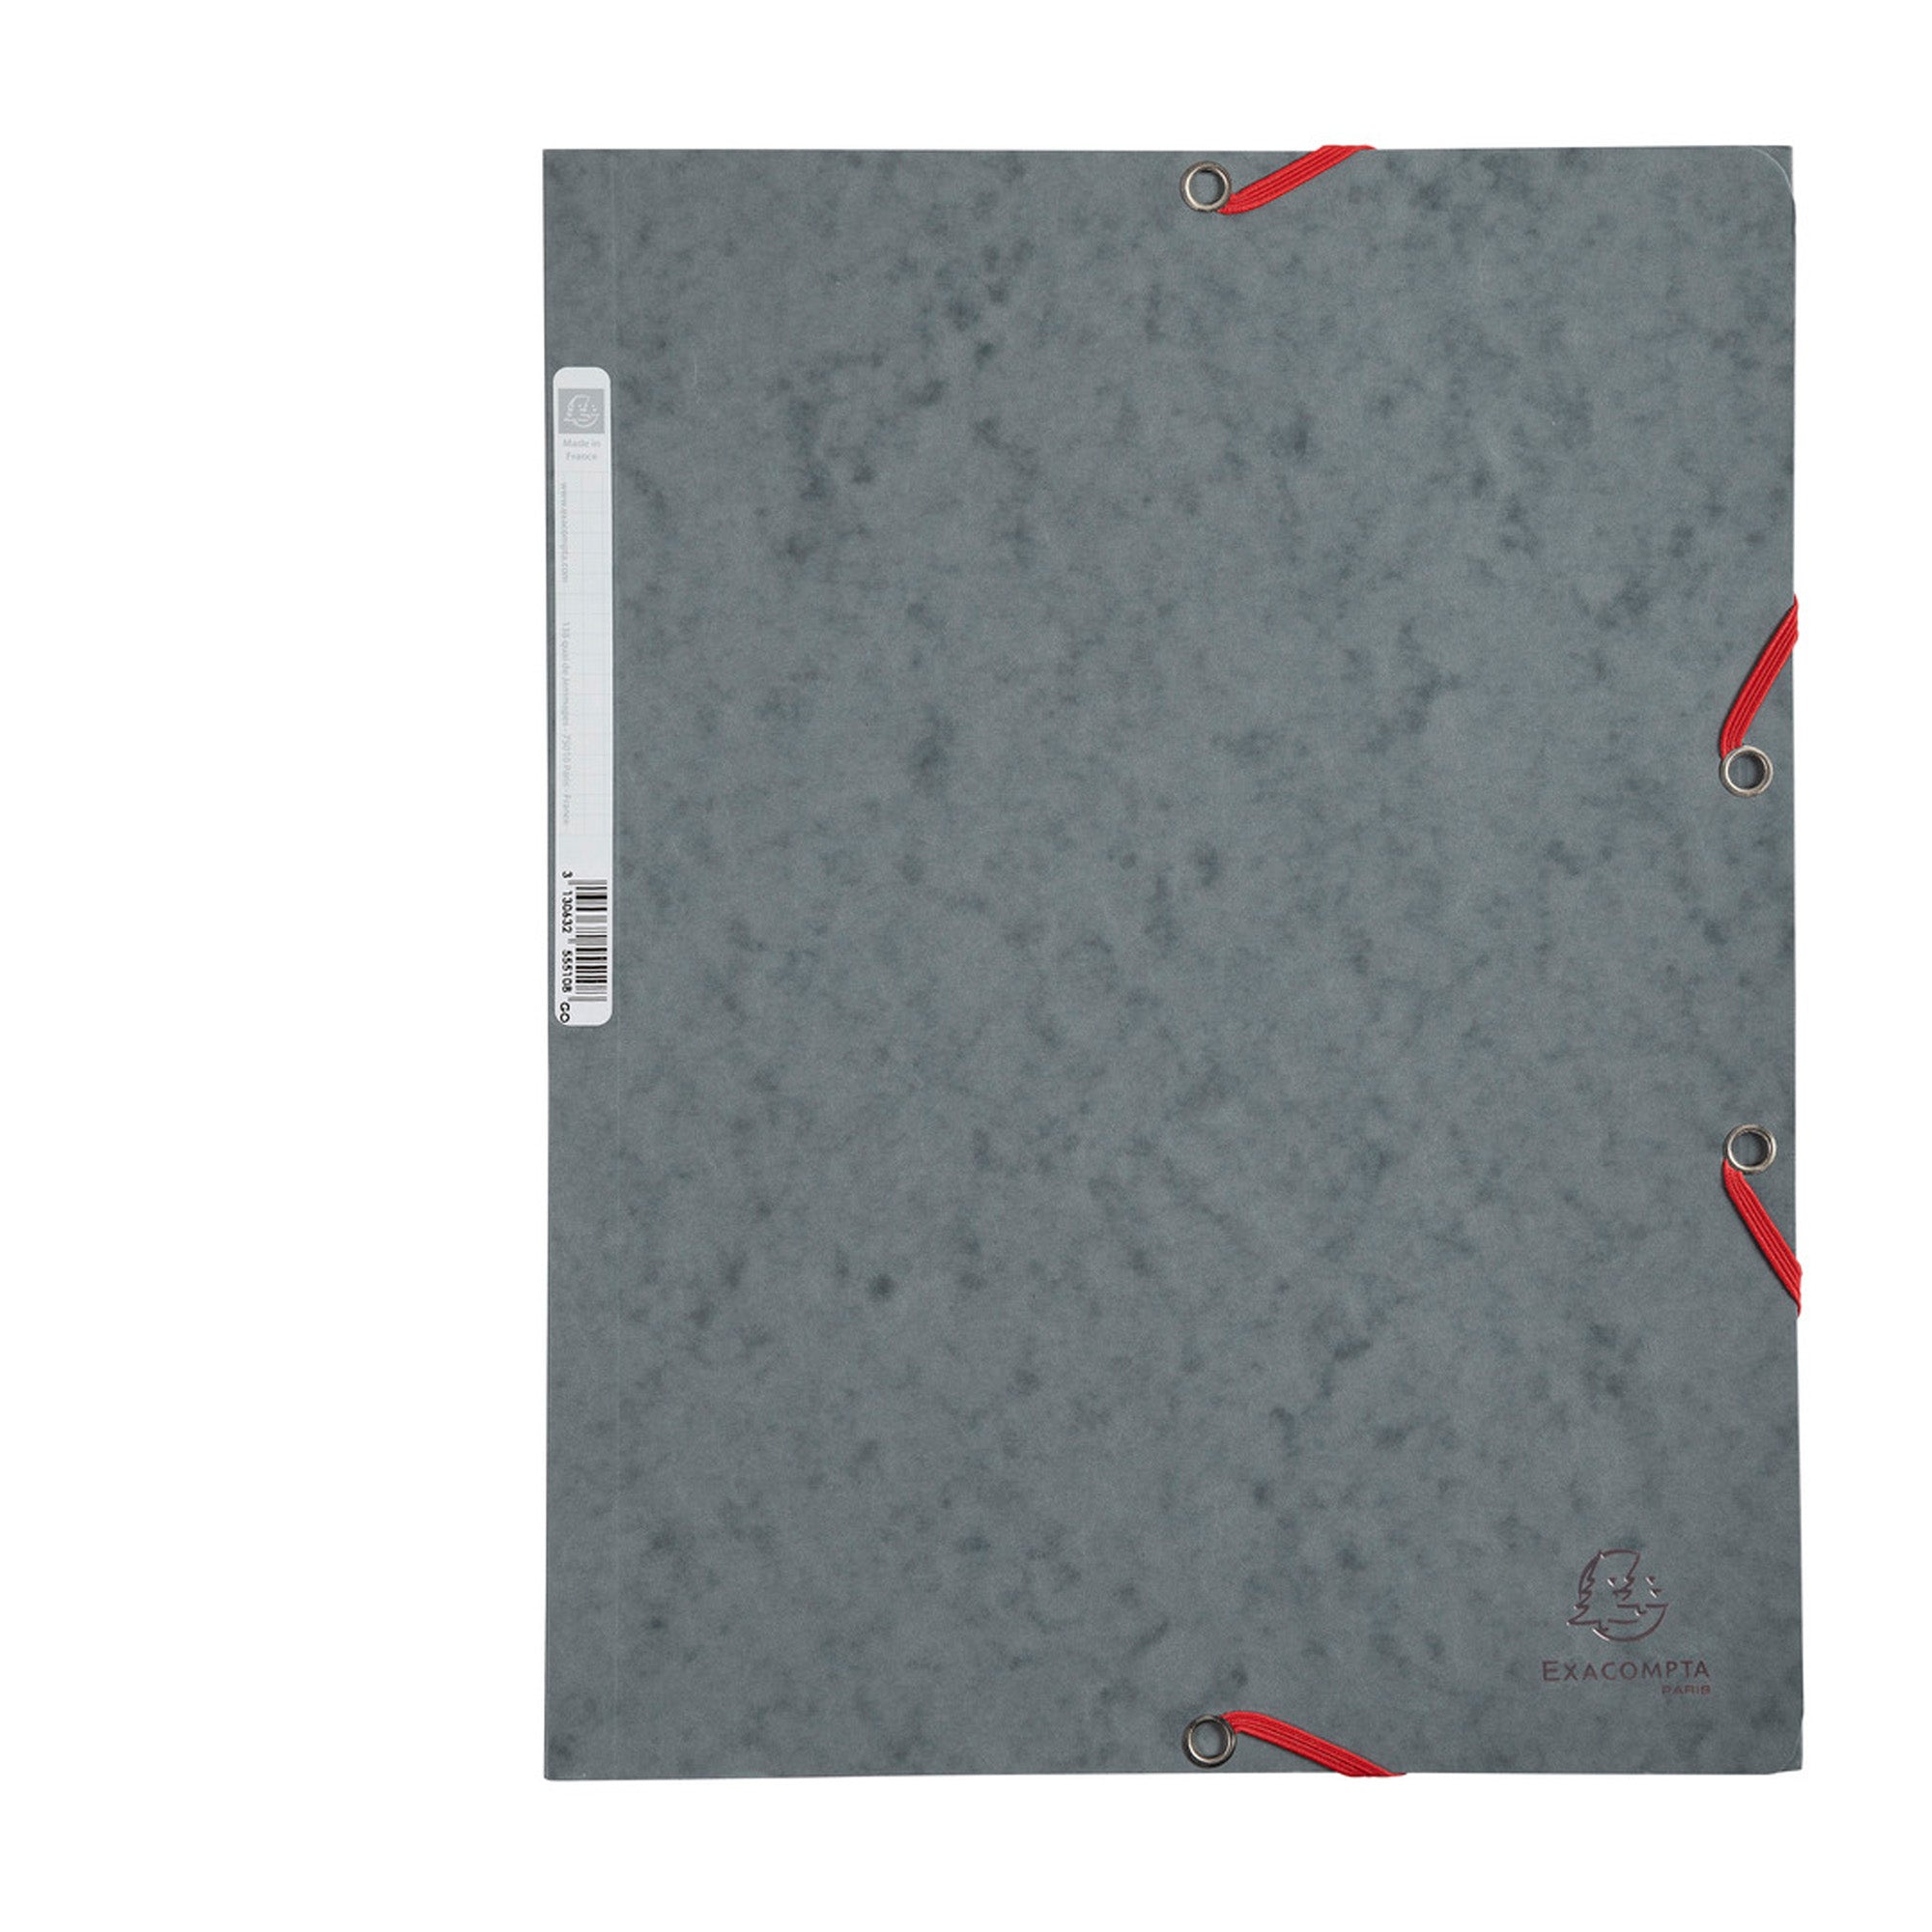 exacompta-cartella-elastico-24x32cm-grigio-cartoncino-lustre-425gr